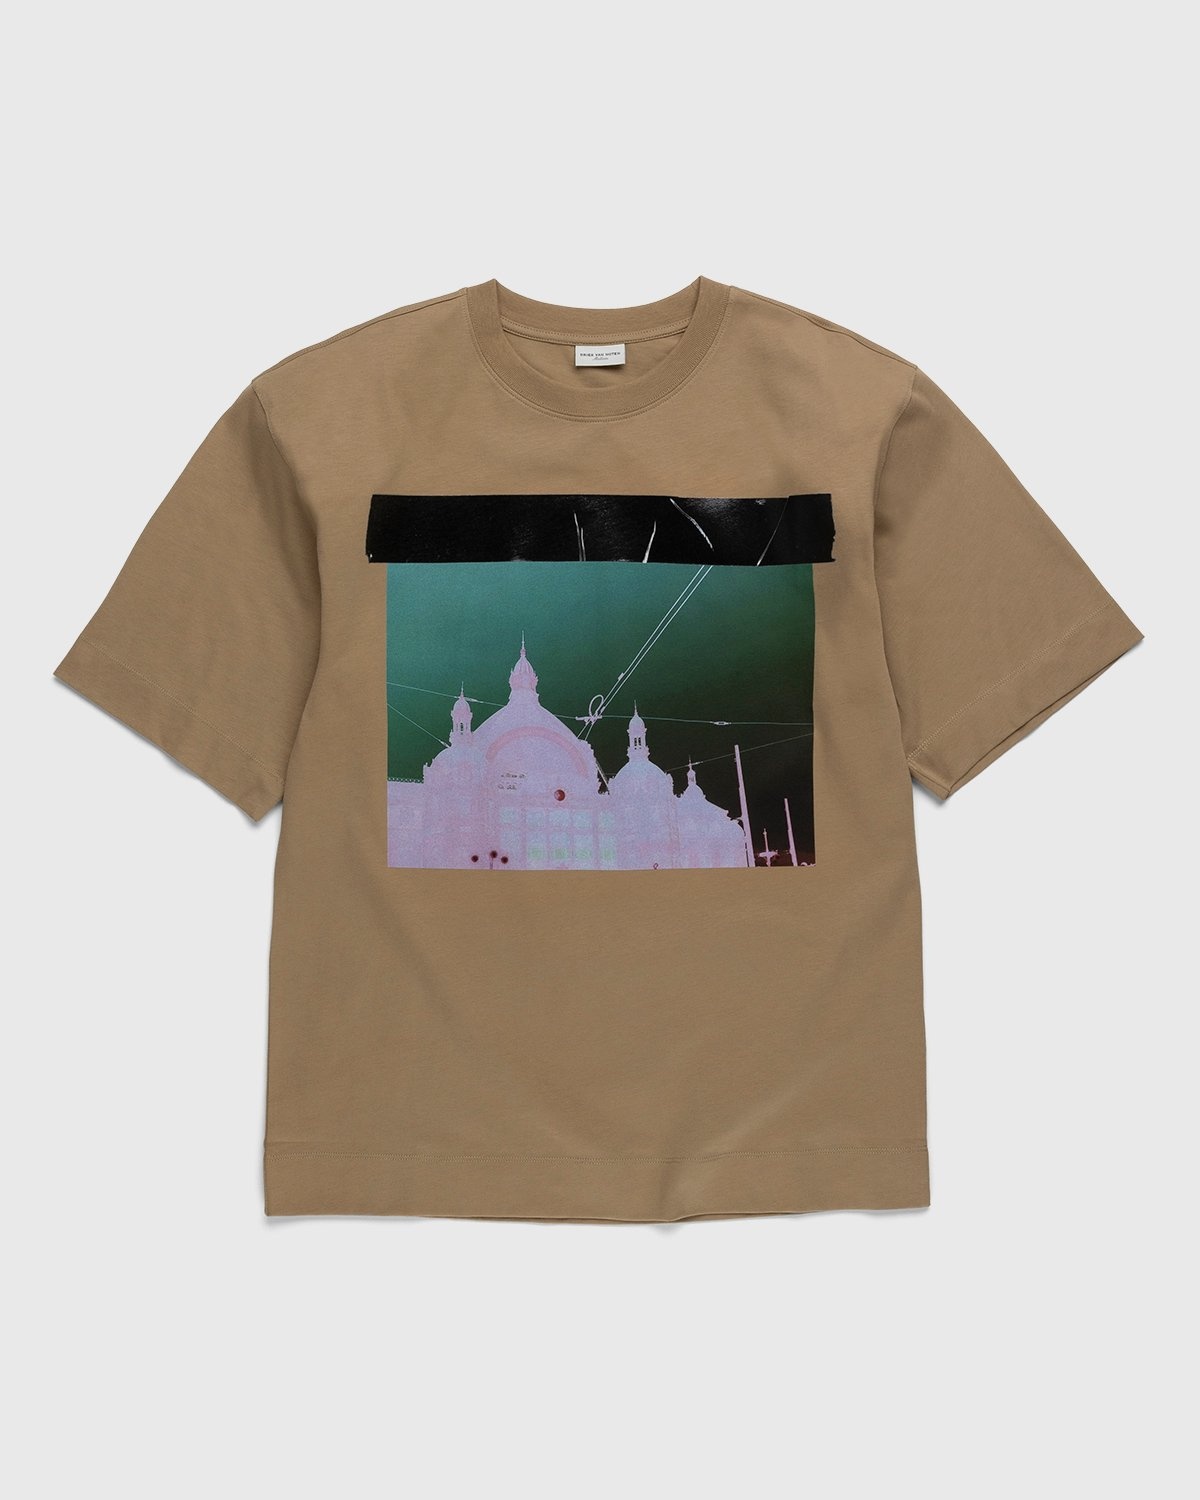 Dries van Noten – Heli Graphic T-Shirt Sand - T-Shirts - Beige - Image 1